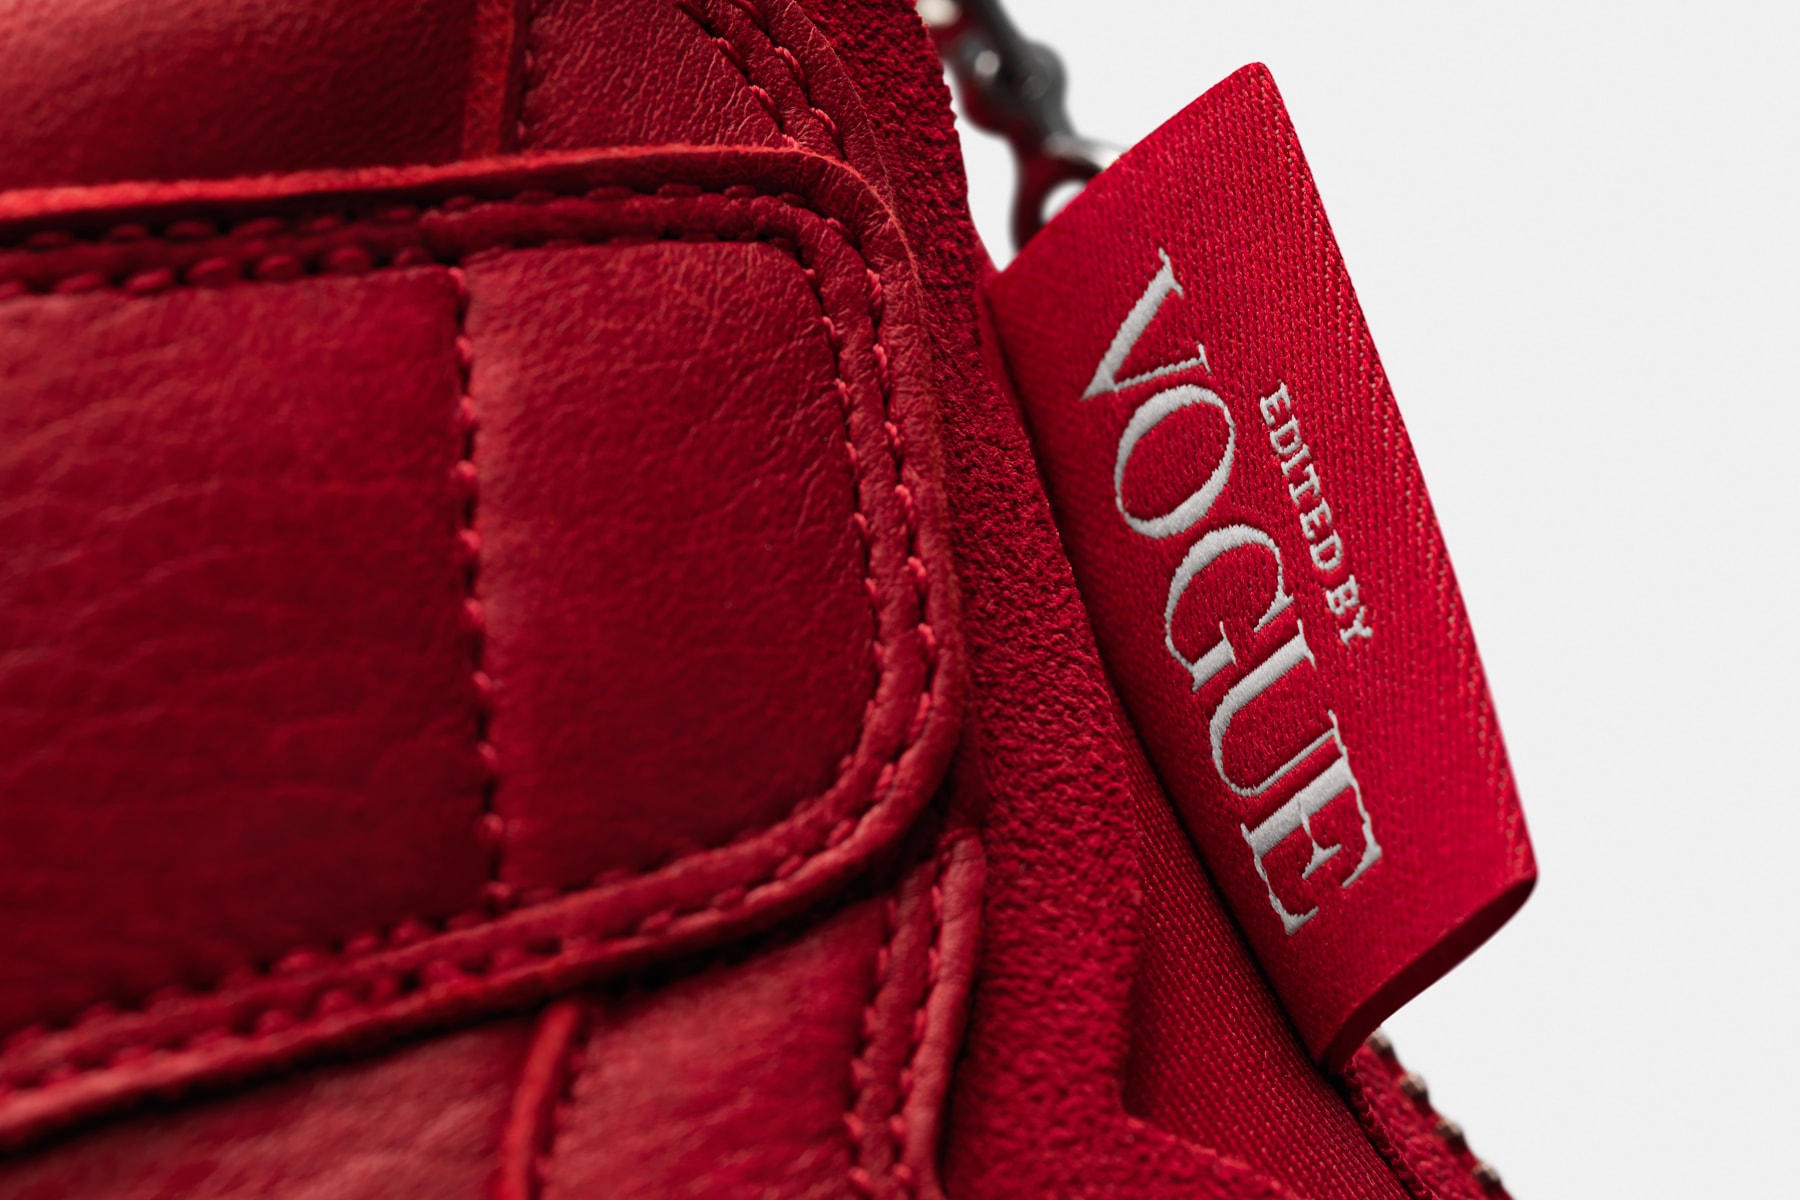 Anna Wintour Vogue magazine nike Air Jordan brand 1 3 Sneakers shoes red white i iii edited by awok ok okay sail university black tweed